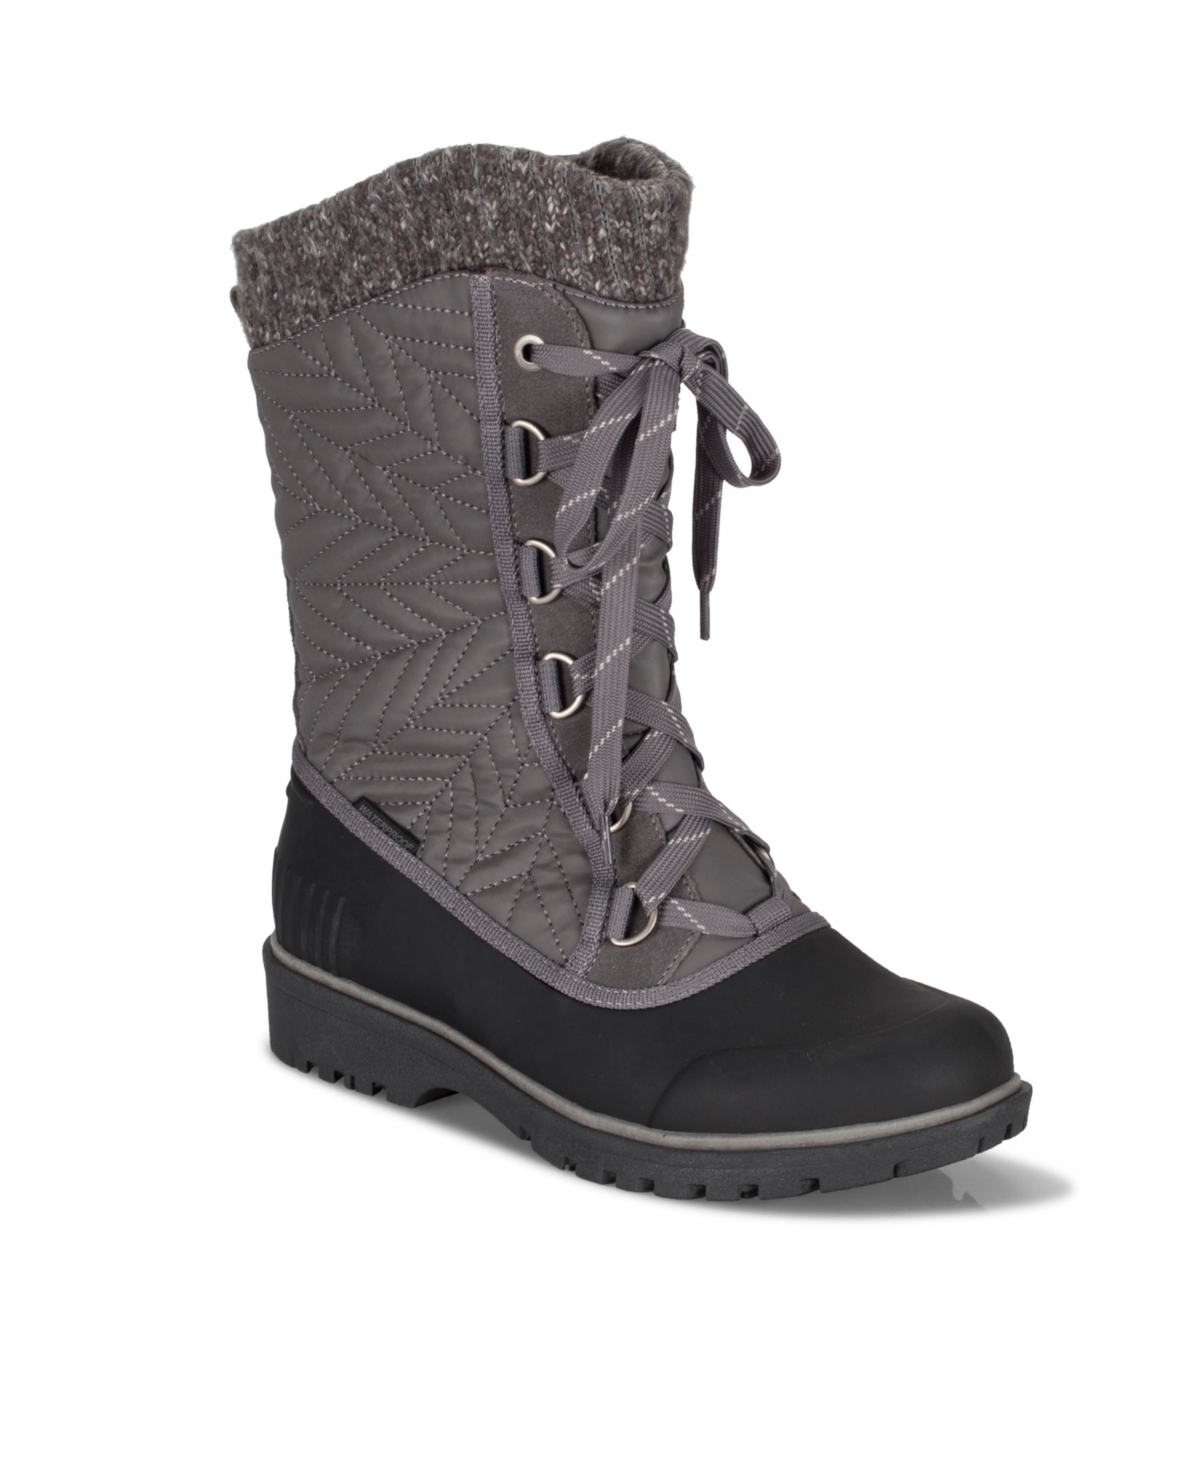 Women's Stark Waterproof Thermal Cold Weather Boots - Dark Grey/Black